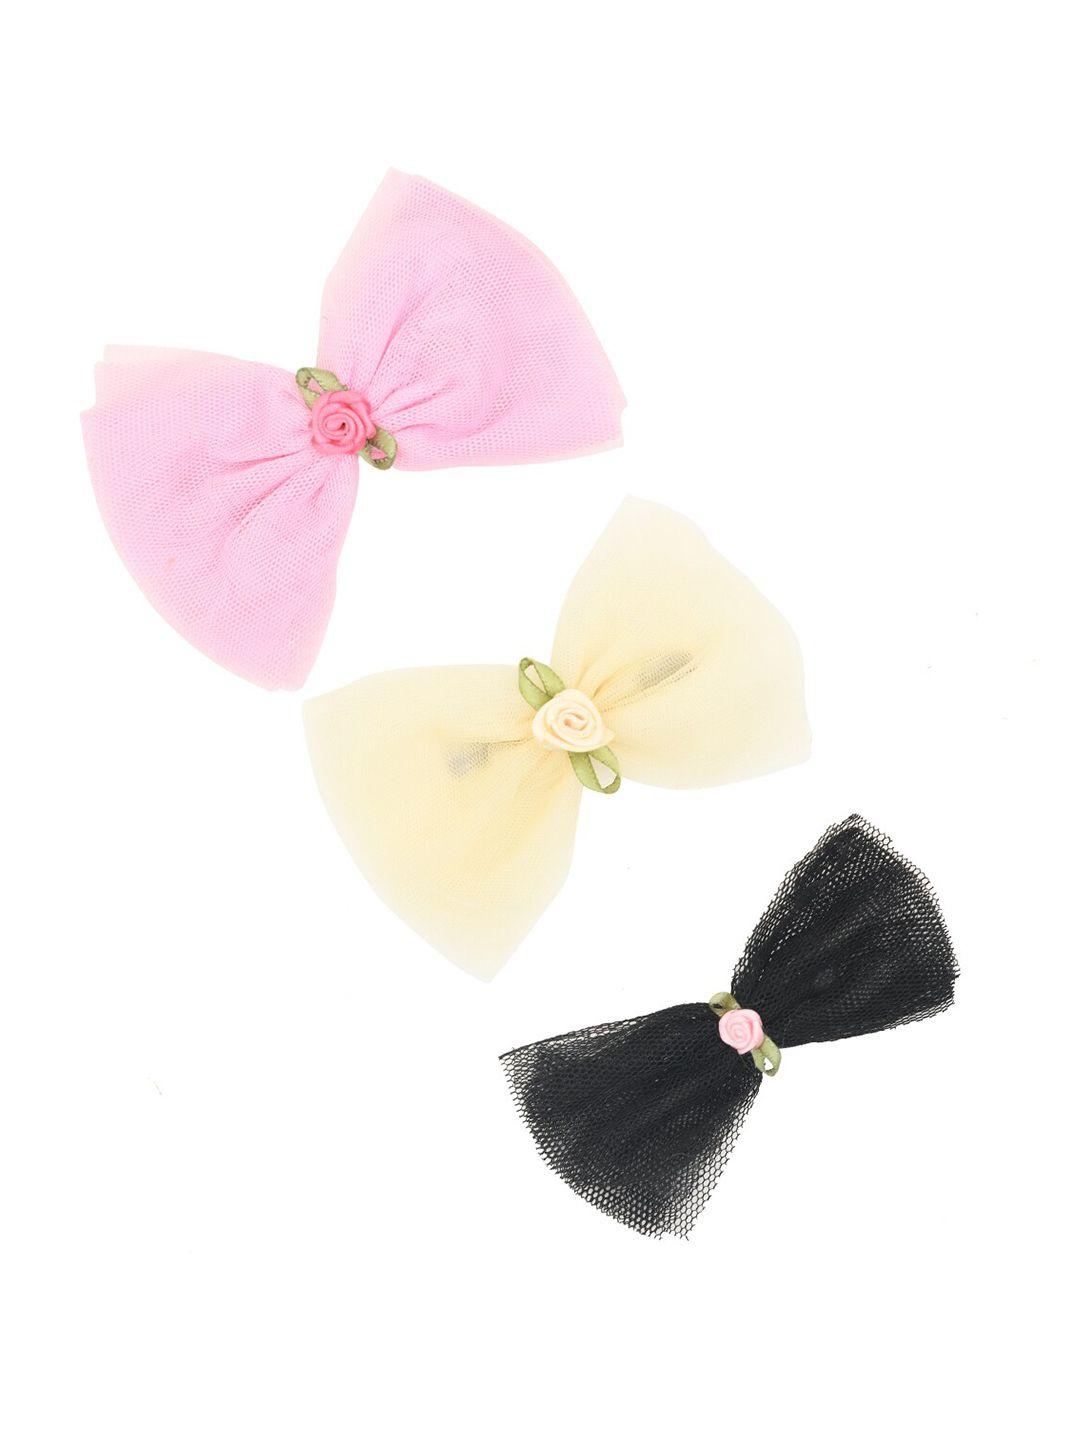 funkrafts-girls-black-&-pink-set-of-3-hair-accessory-set